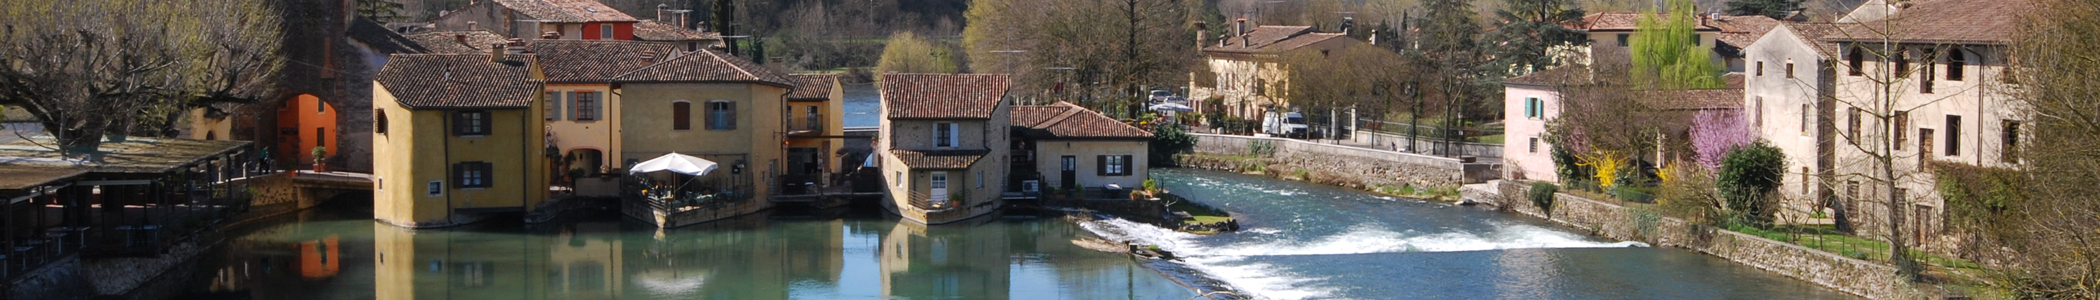 Borghetto sul Mincio banner River through town with weir.jpg